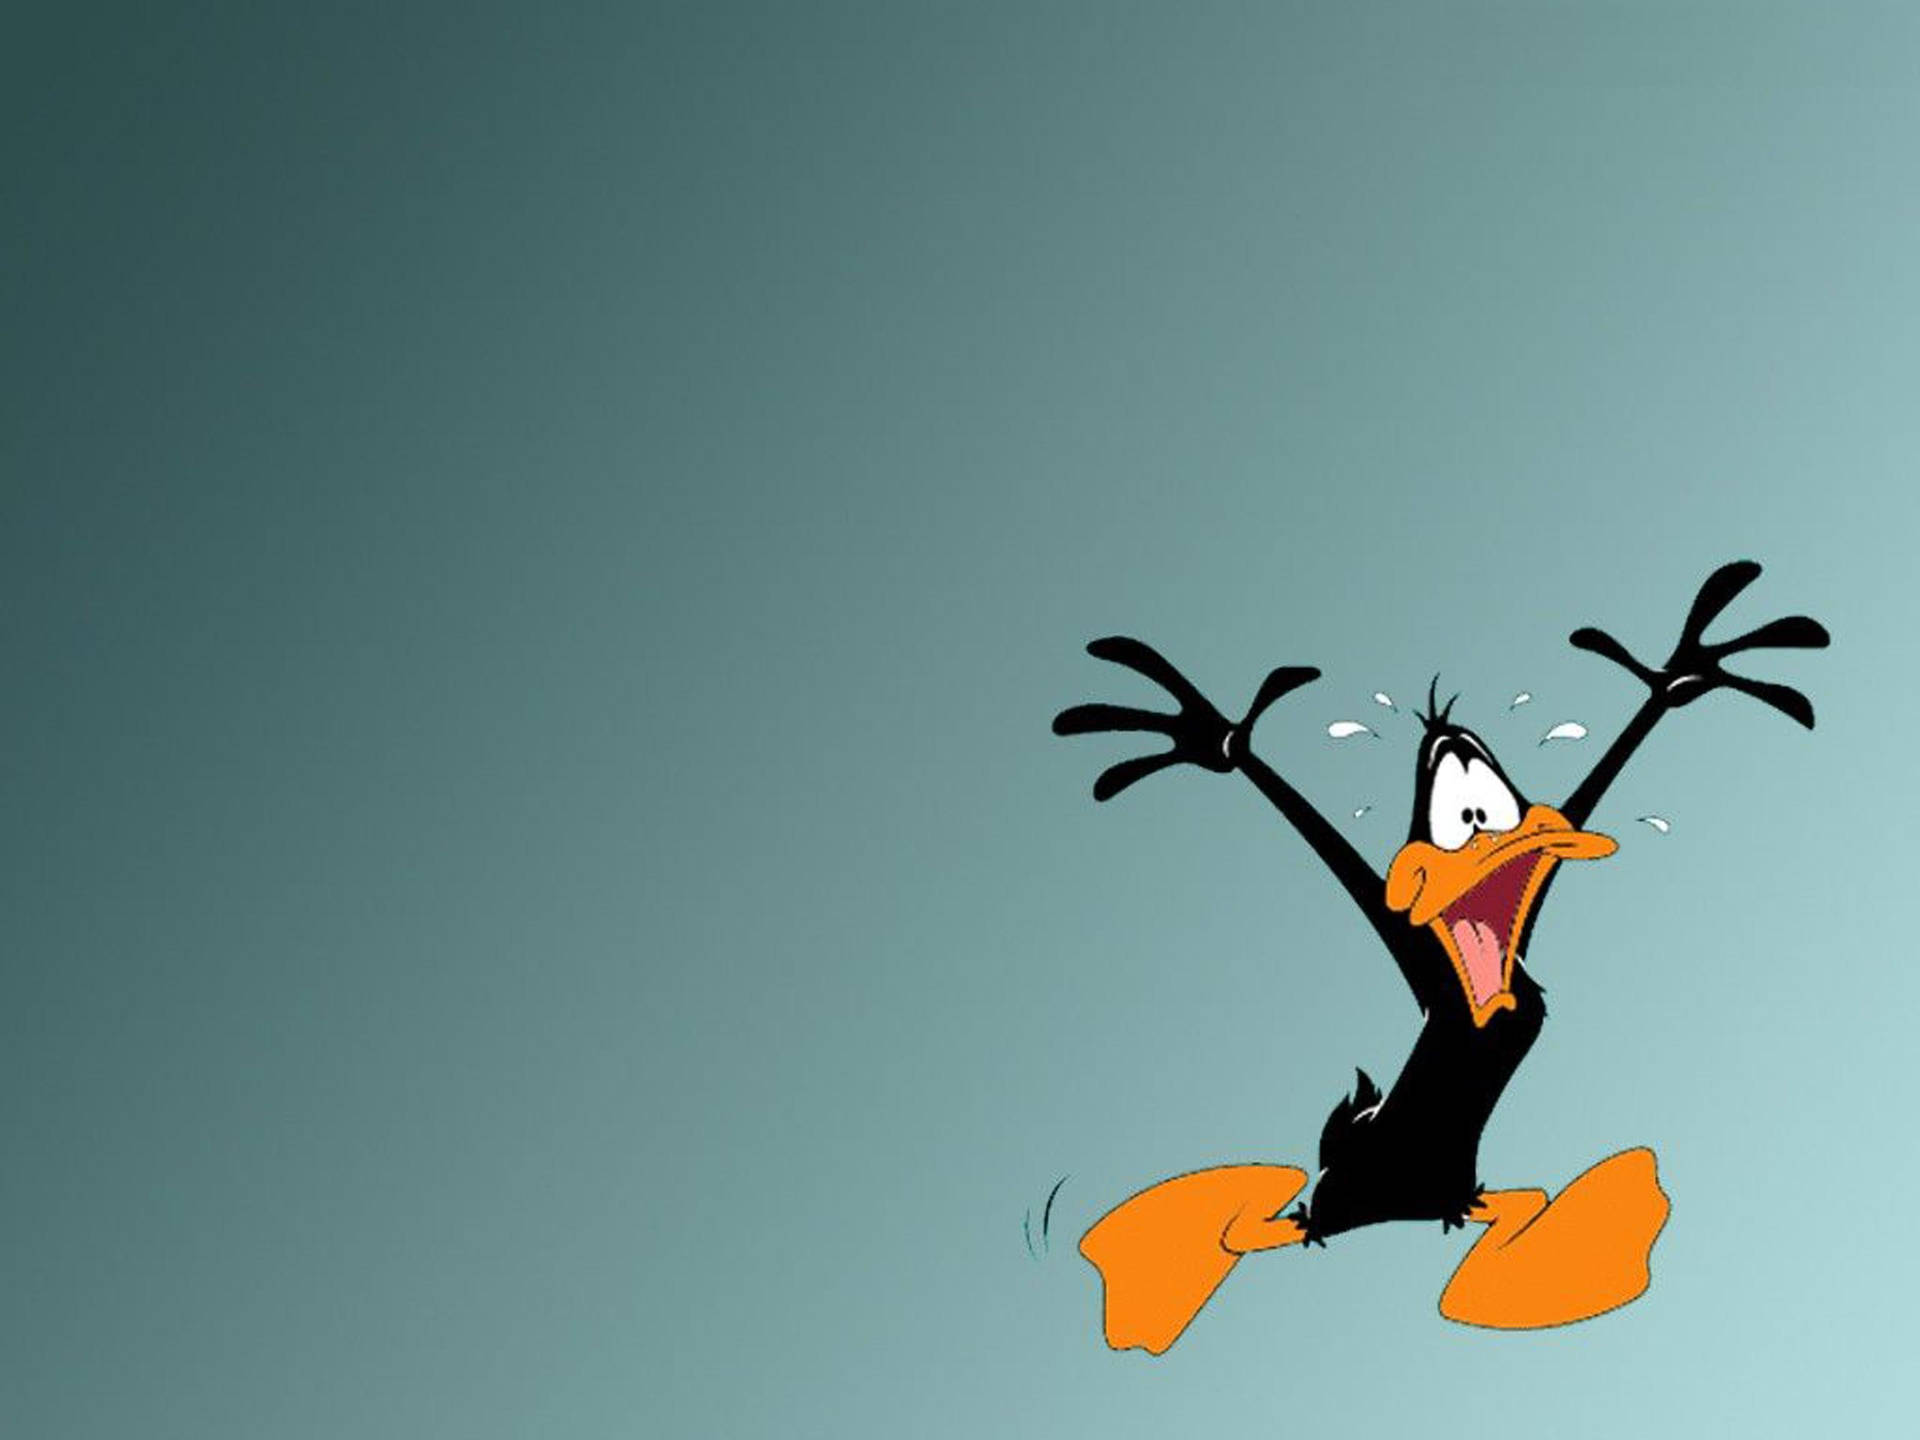 Looney Tunes Running Daffy Duck Wallpaper